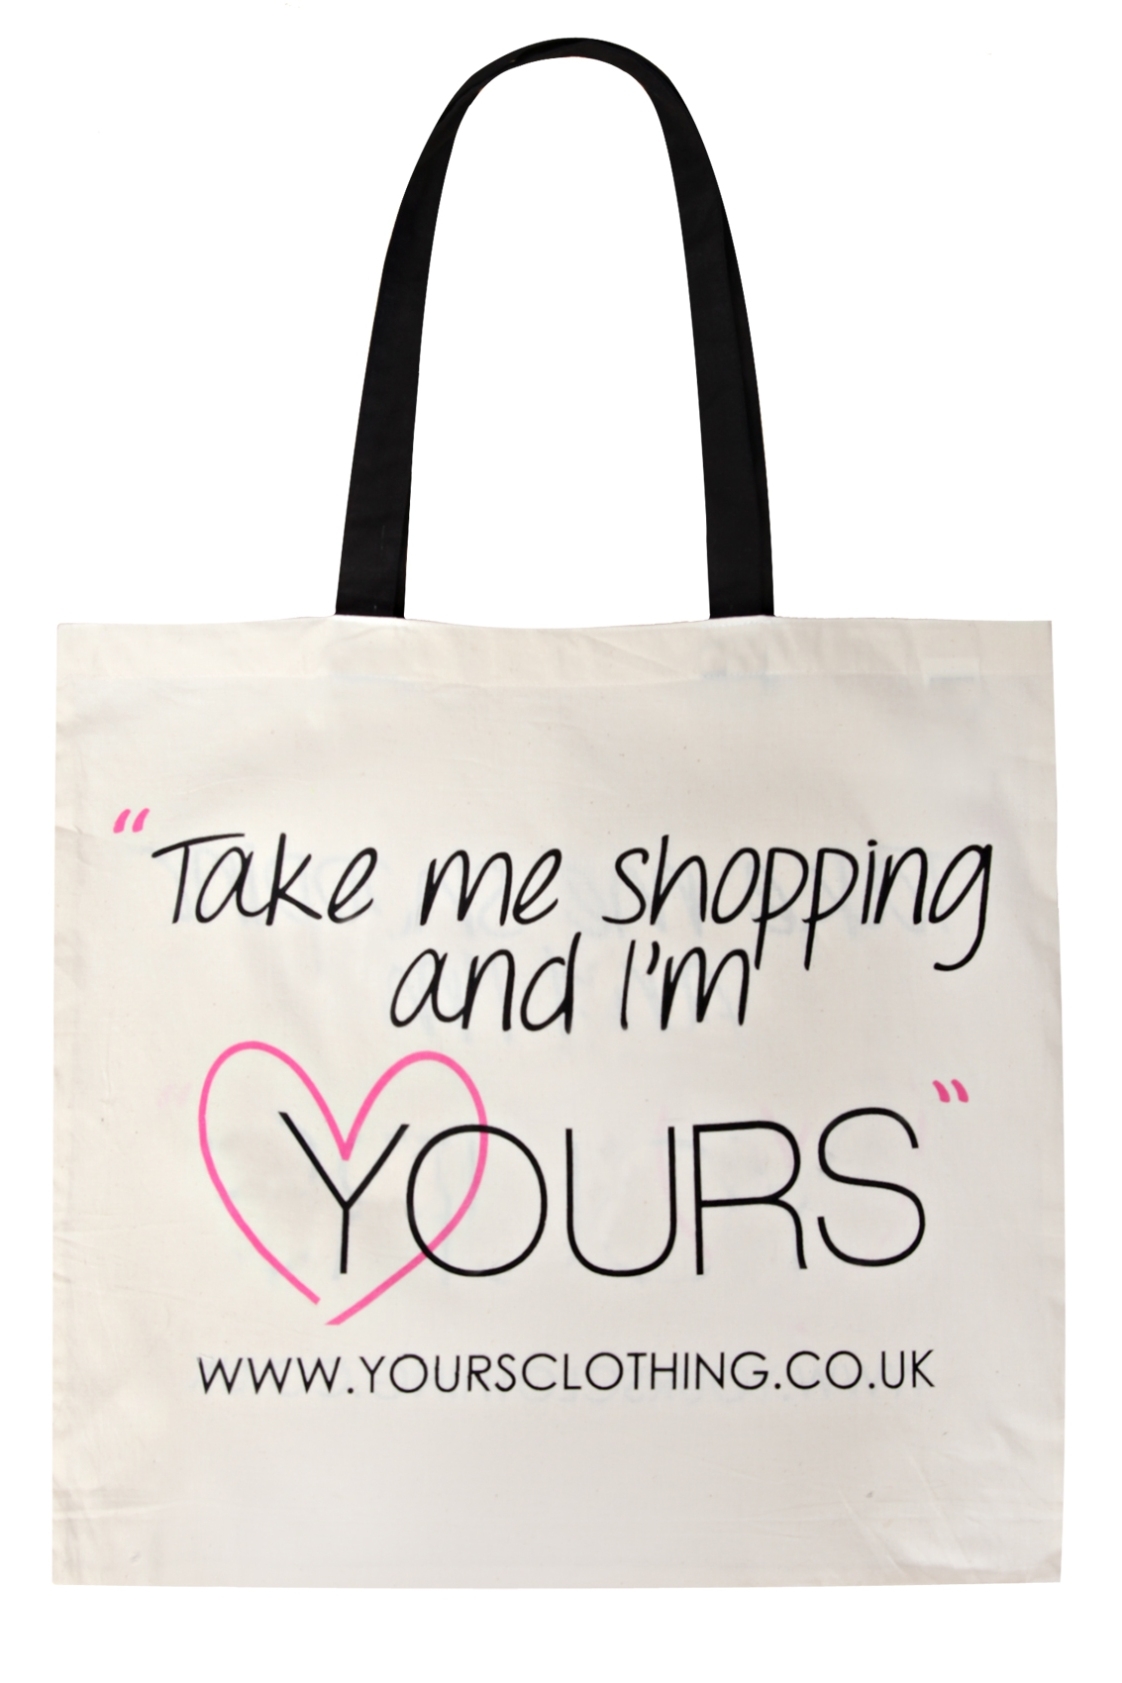 Yours Clothing Shopper Canvas Bag regarding 2 X 4 Label Template 10 Per Sheet